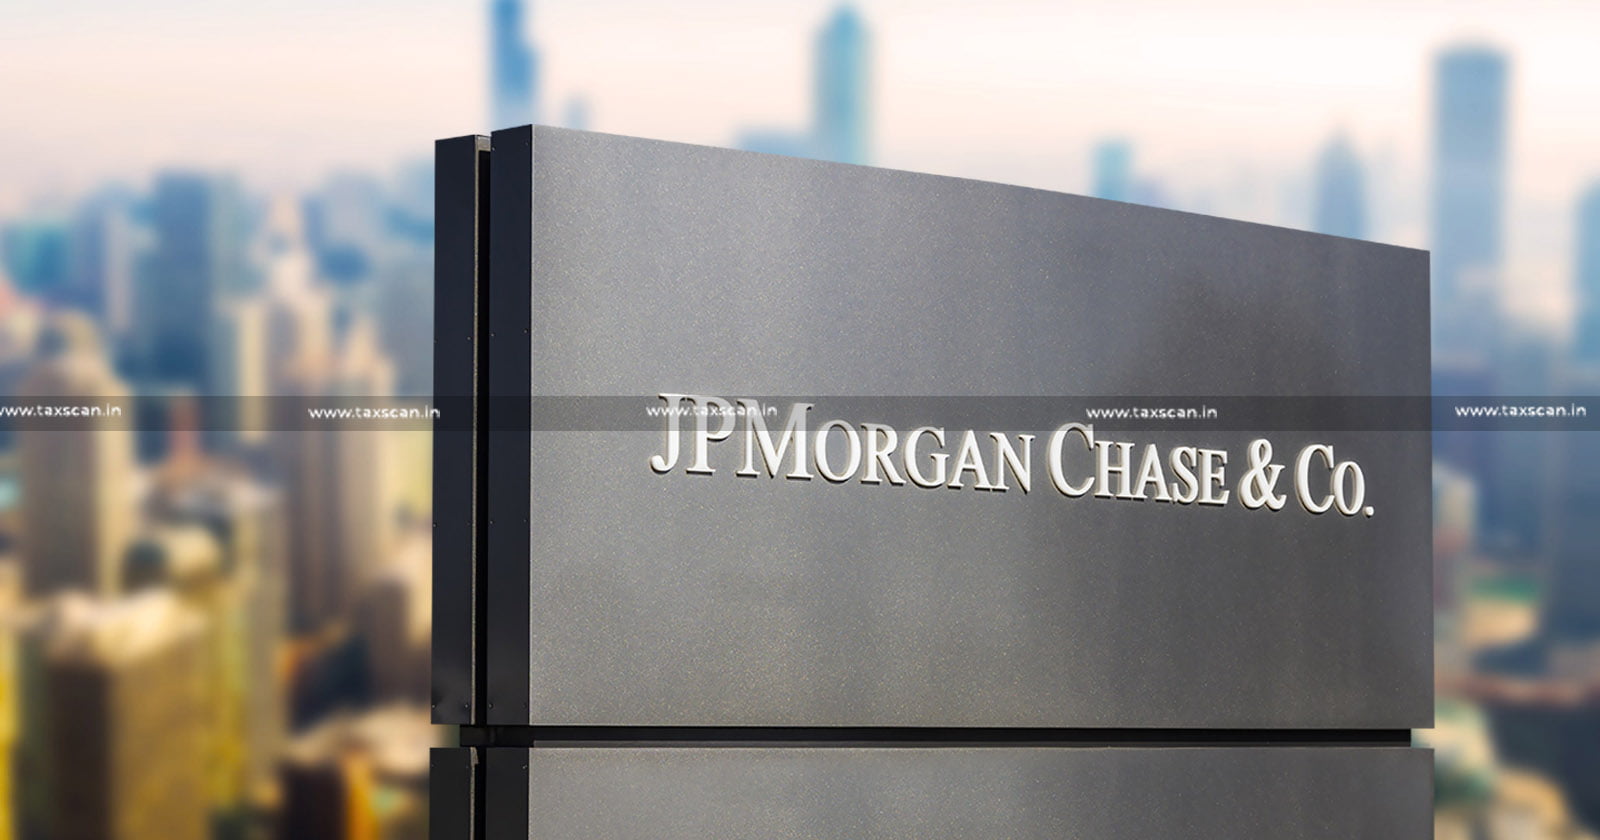 MBA - Vacancy in JPMorgan - JPMorgan Chase & Co - Vacancy in JPMorgan Chase & Co - CA - MBA Vacancy - TAXSCAN